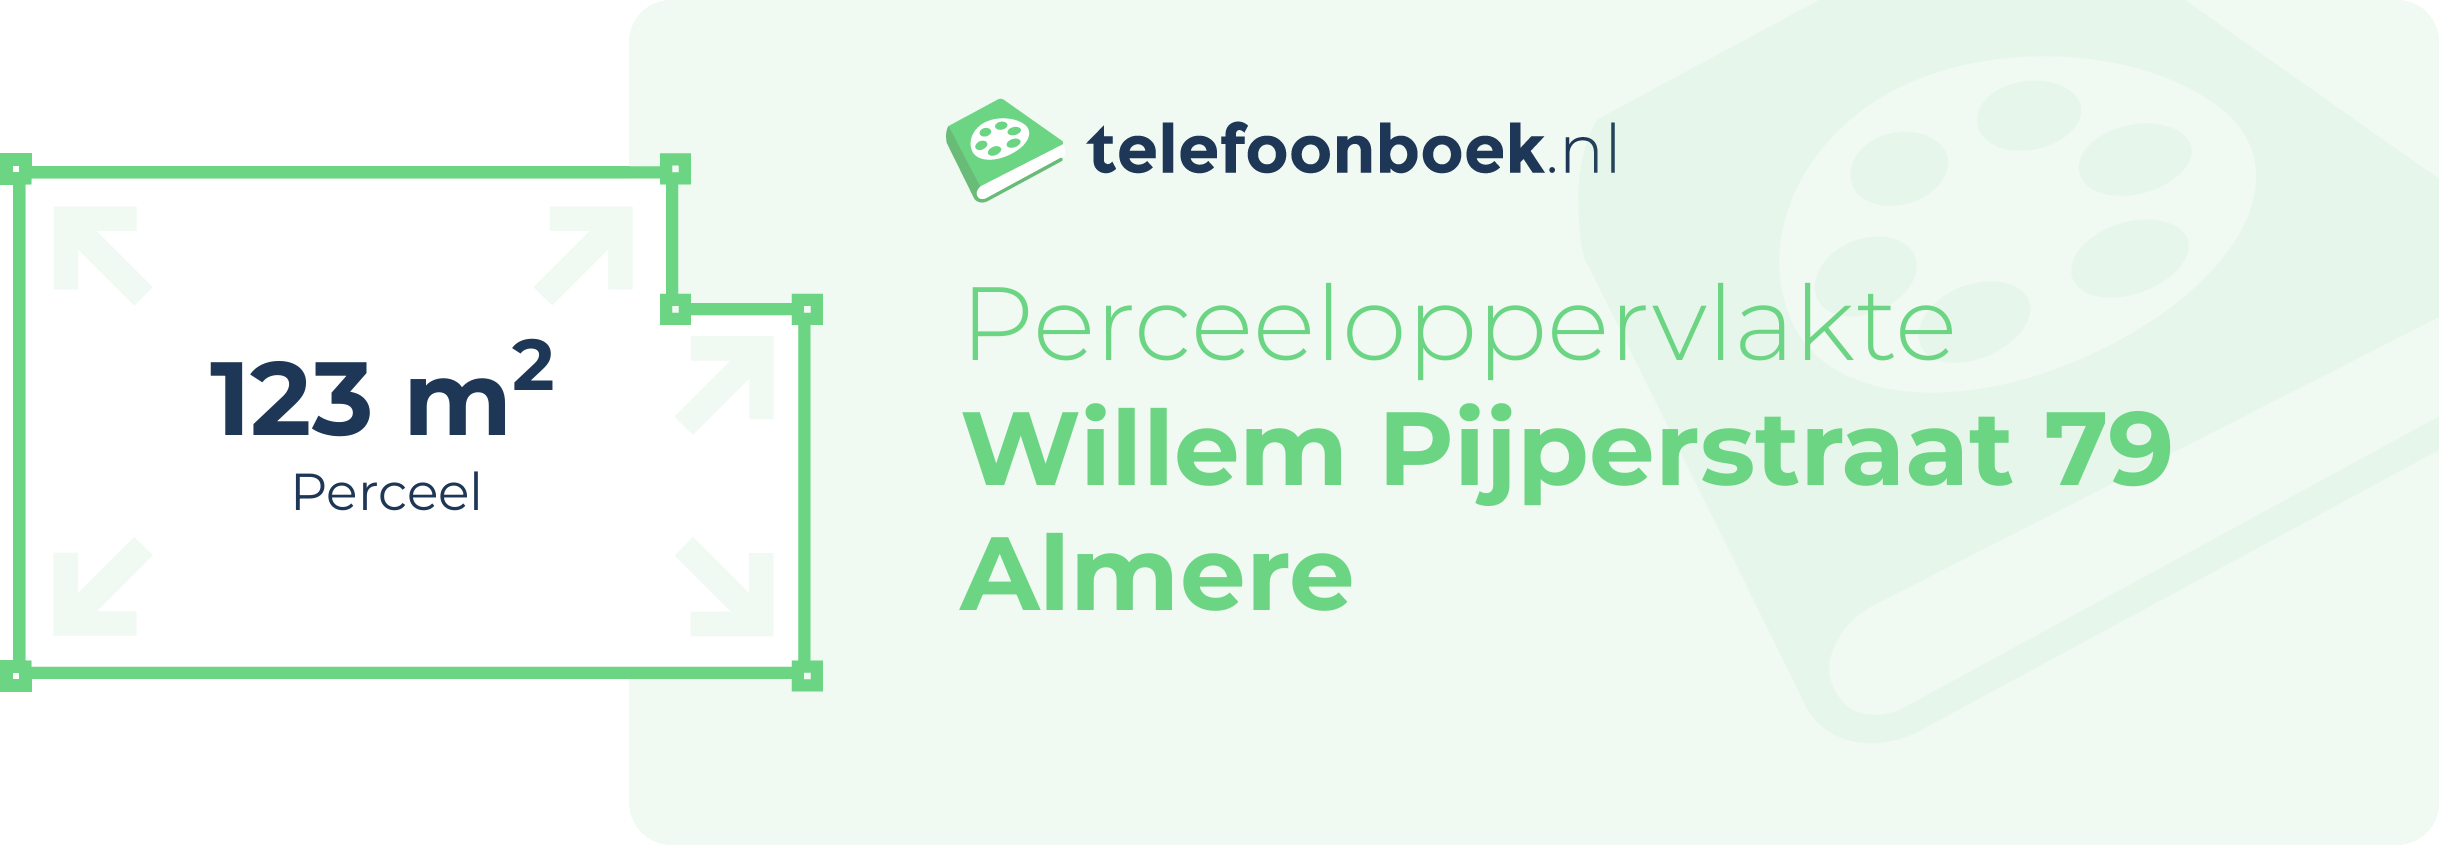 Perceeloppervlakte Willem Pijperstraat 79 Almere